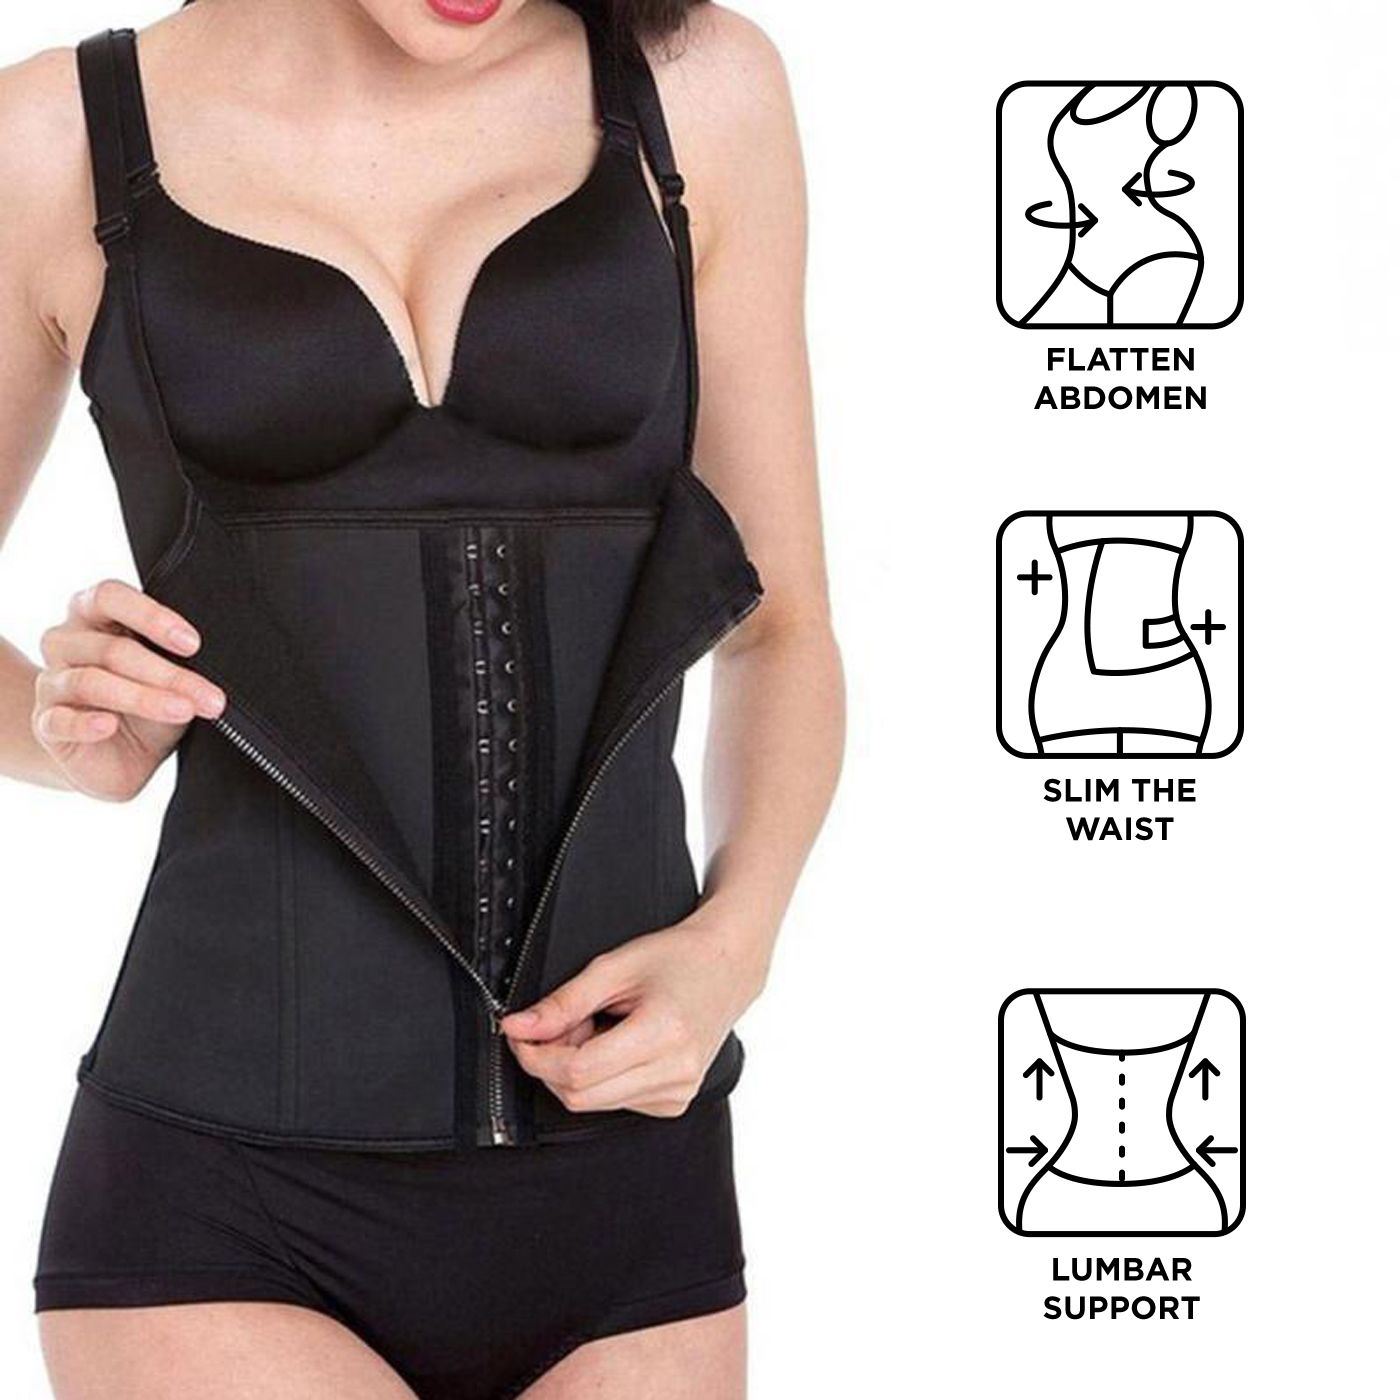 Zip-style Women's Body-contracting Court Corset, Neoprene 3-layer AppliquÃ© Wicking Vest And Shapewear